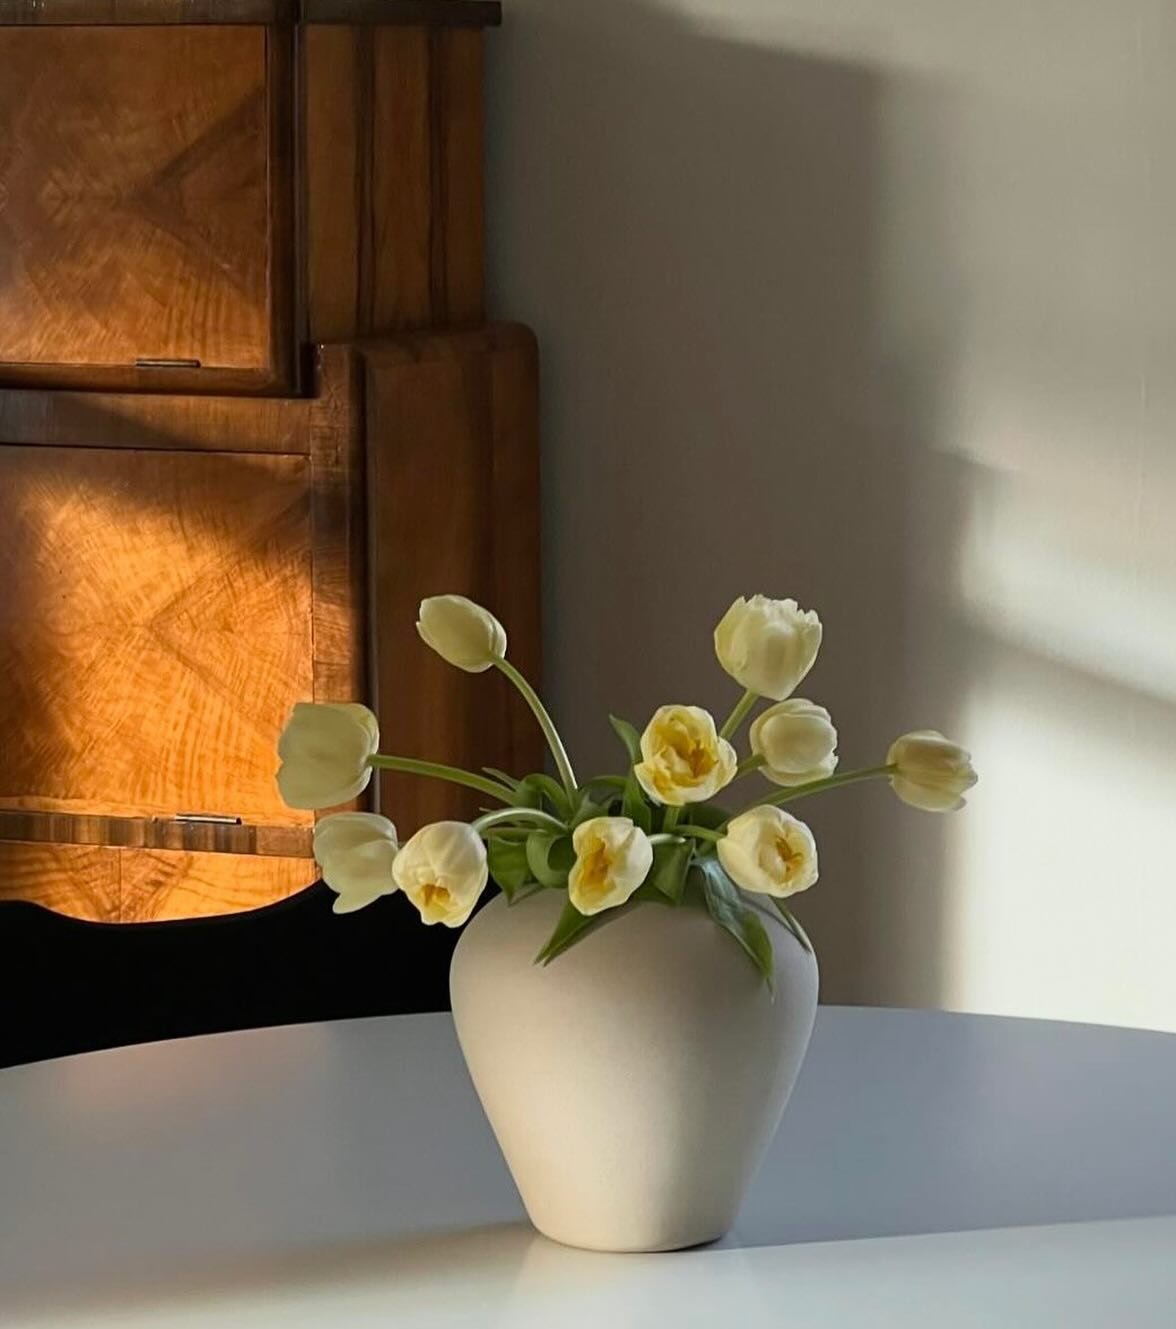 May flowers by @jessica_manning 🤎 

US made handmade ceramic vase 

#SISTAINapproved #SISTAIN #handmadeceramics #handmadevase #sustainableliving